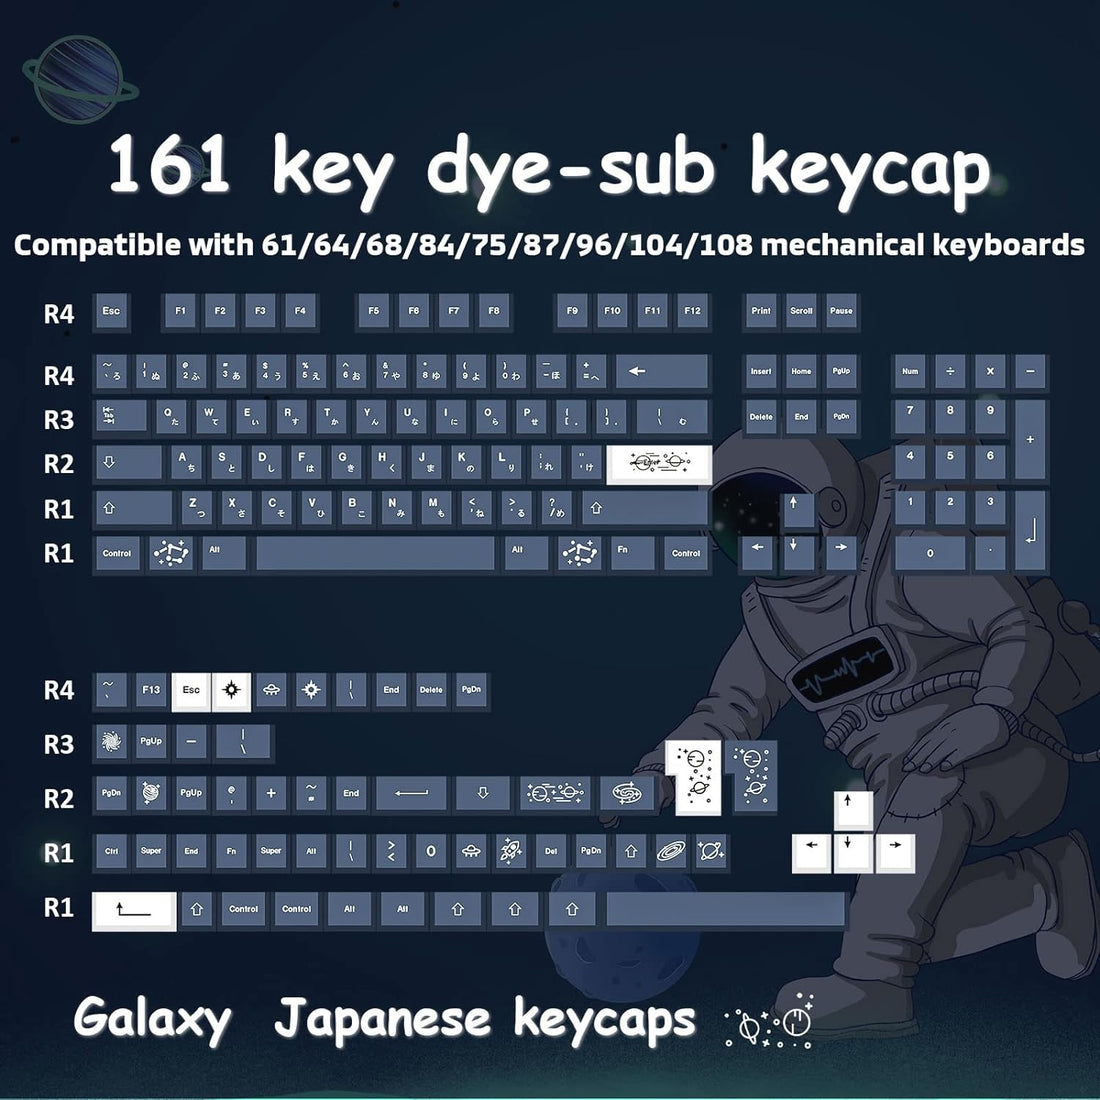 Hyekit Custom Keycaps - Dye-Sublimation PBT Keycaps, Japanese Keycaps, Cherry Profile, 161 Key Set, for Cherry Gateron MX Kailh Switches Mechanical Keyboard, US and UK Layouts (Galaxy)